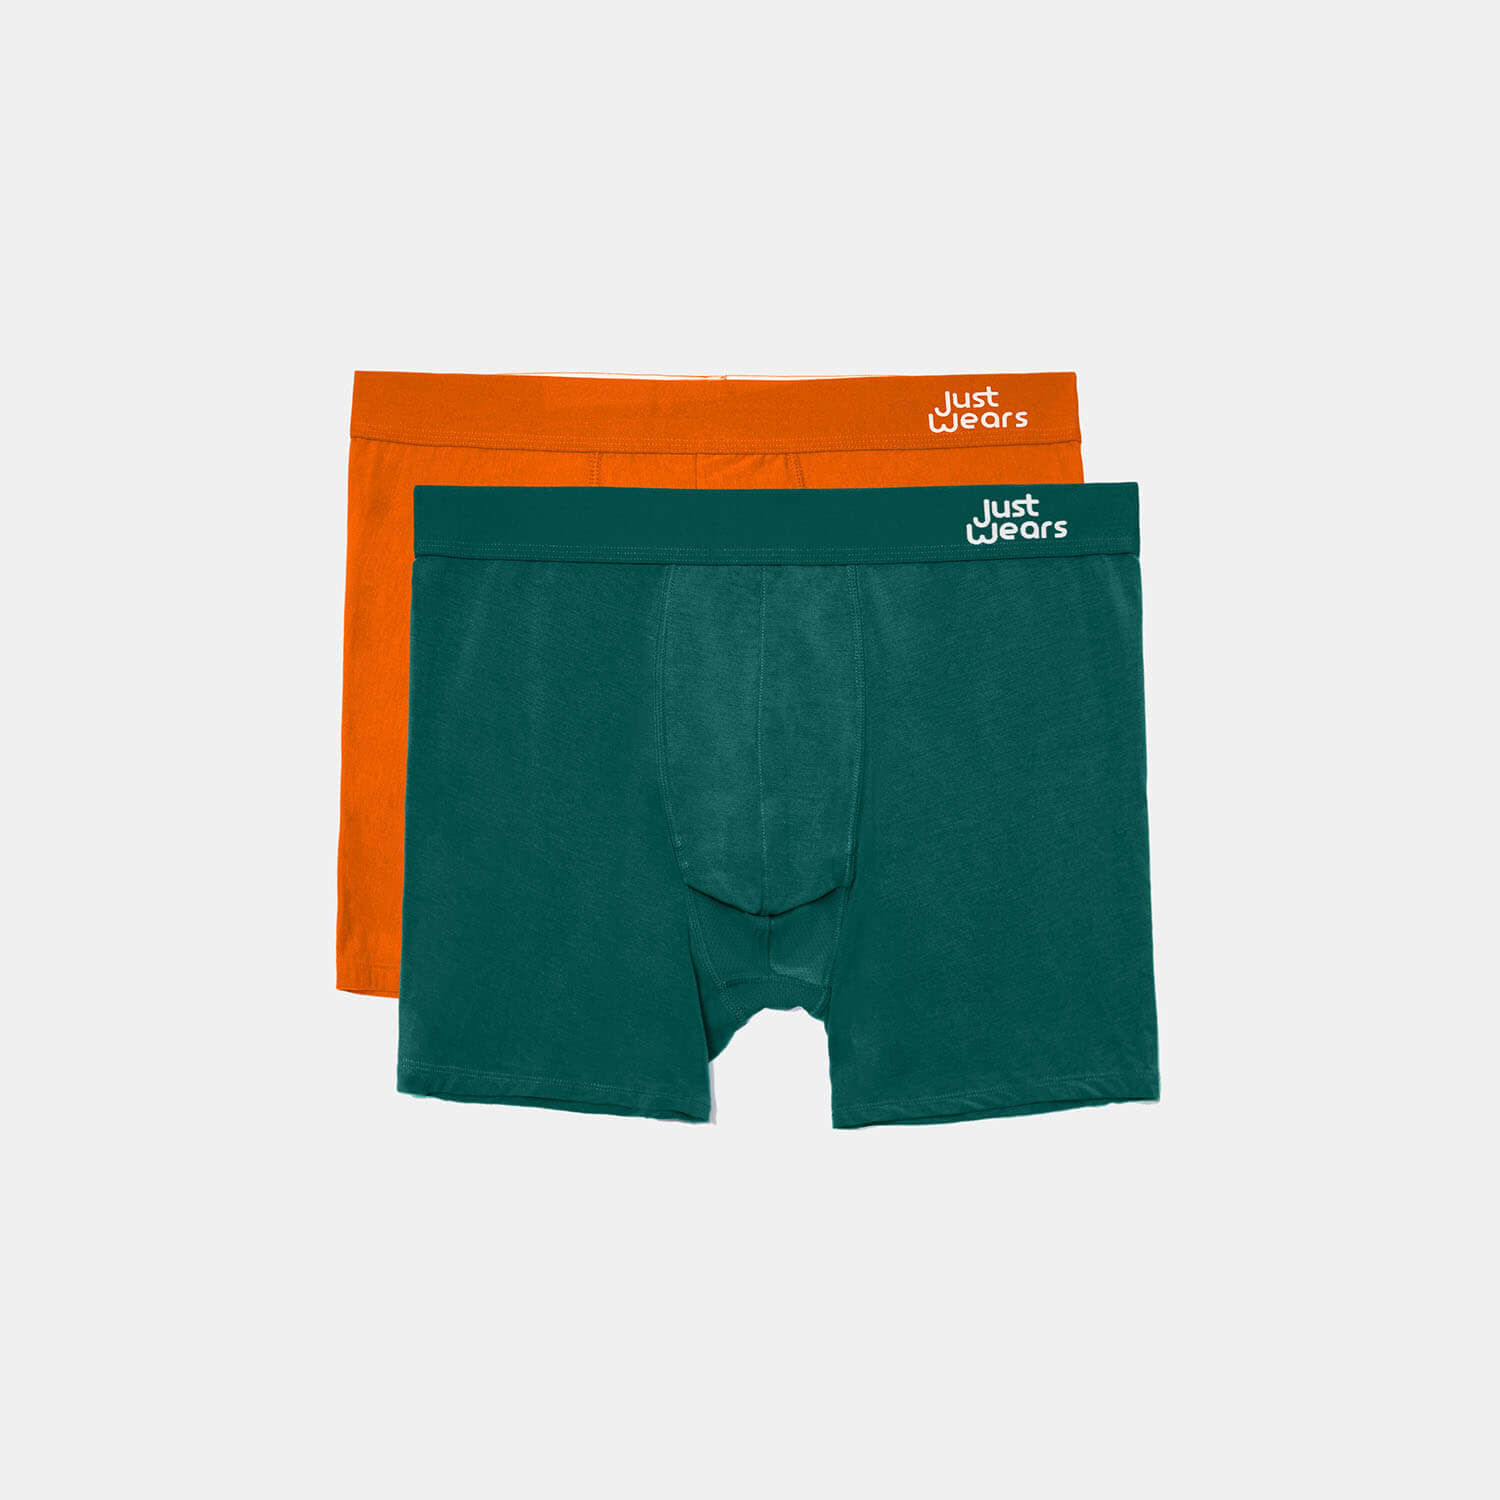 Boxer Briefs Duo Pack (color - Orange & Green)